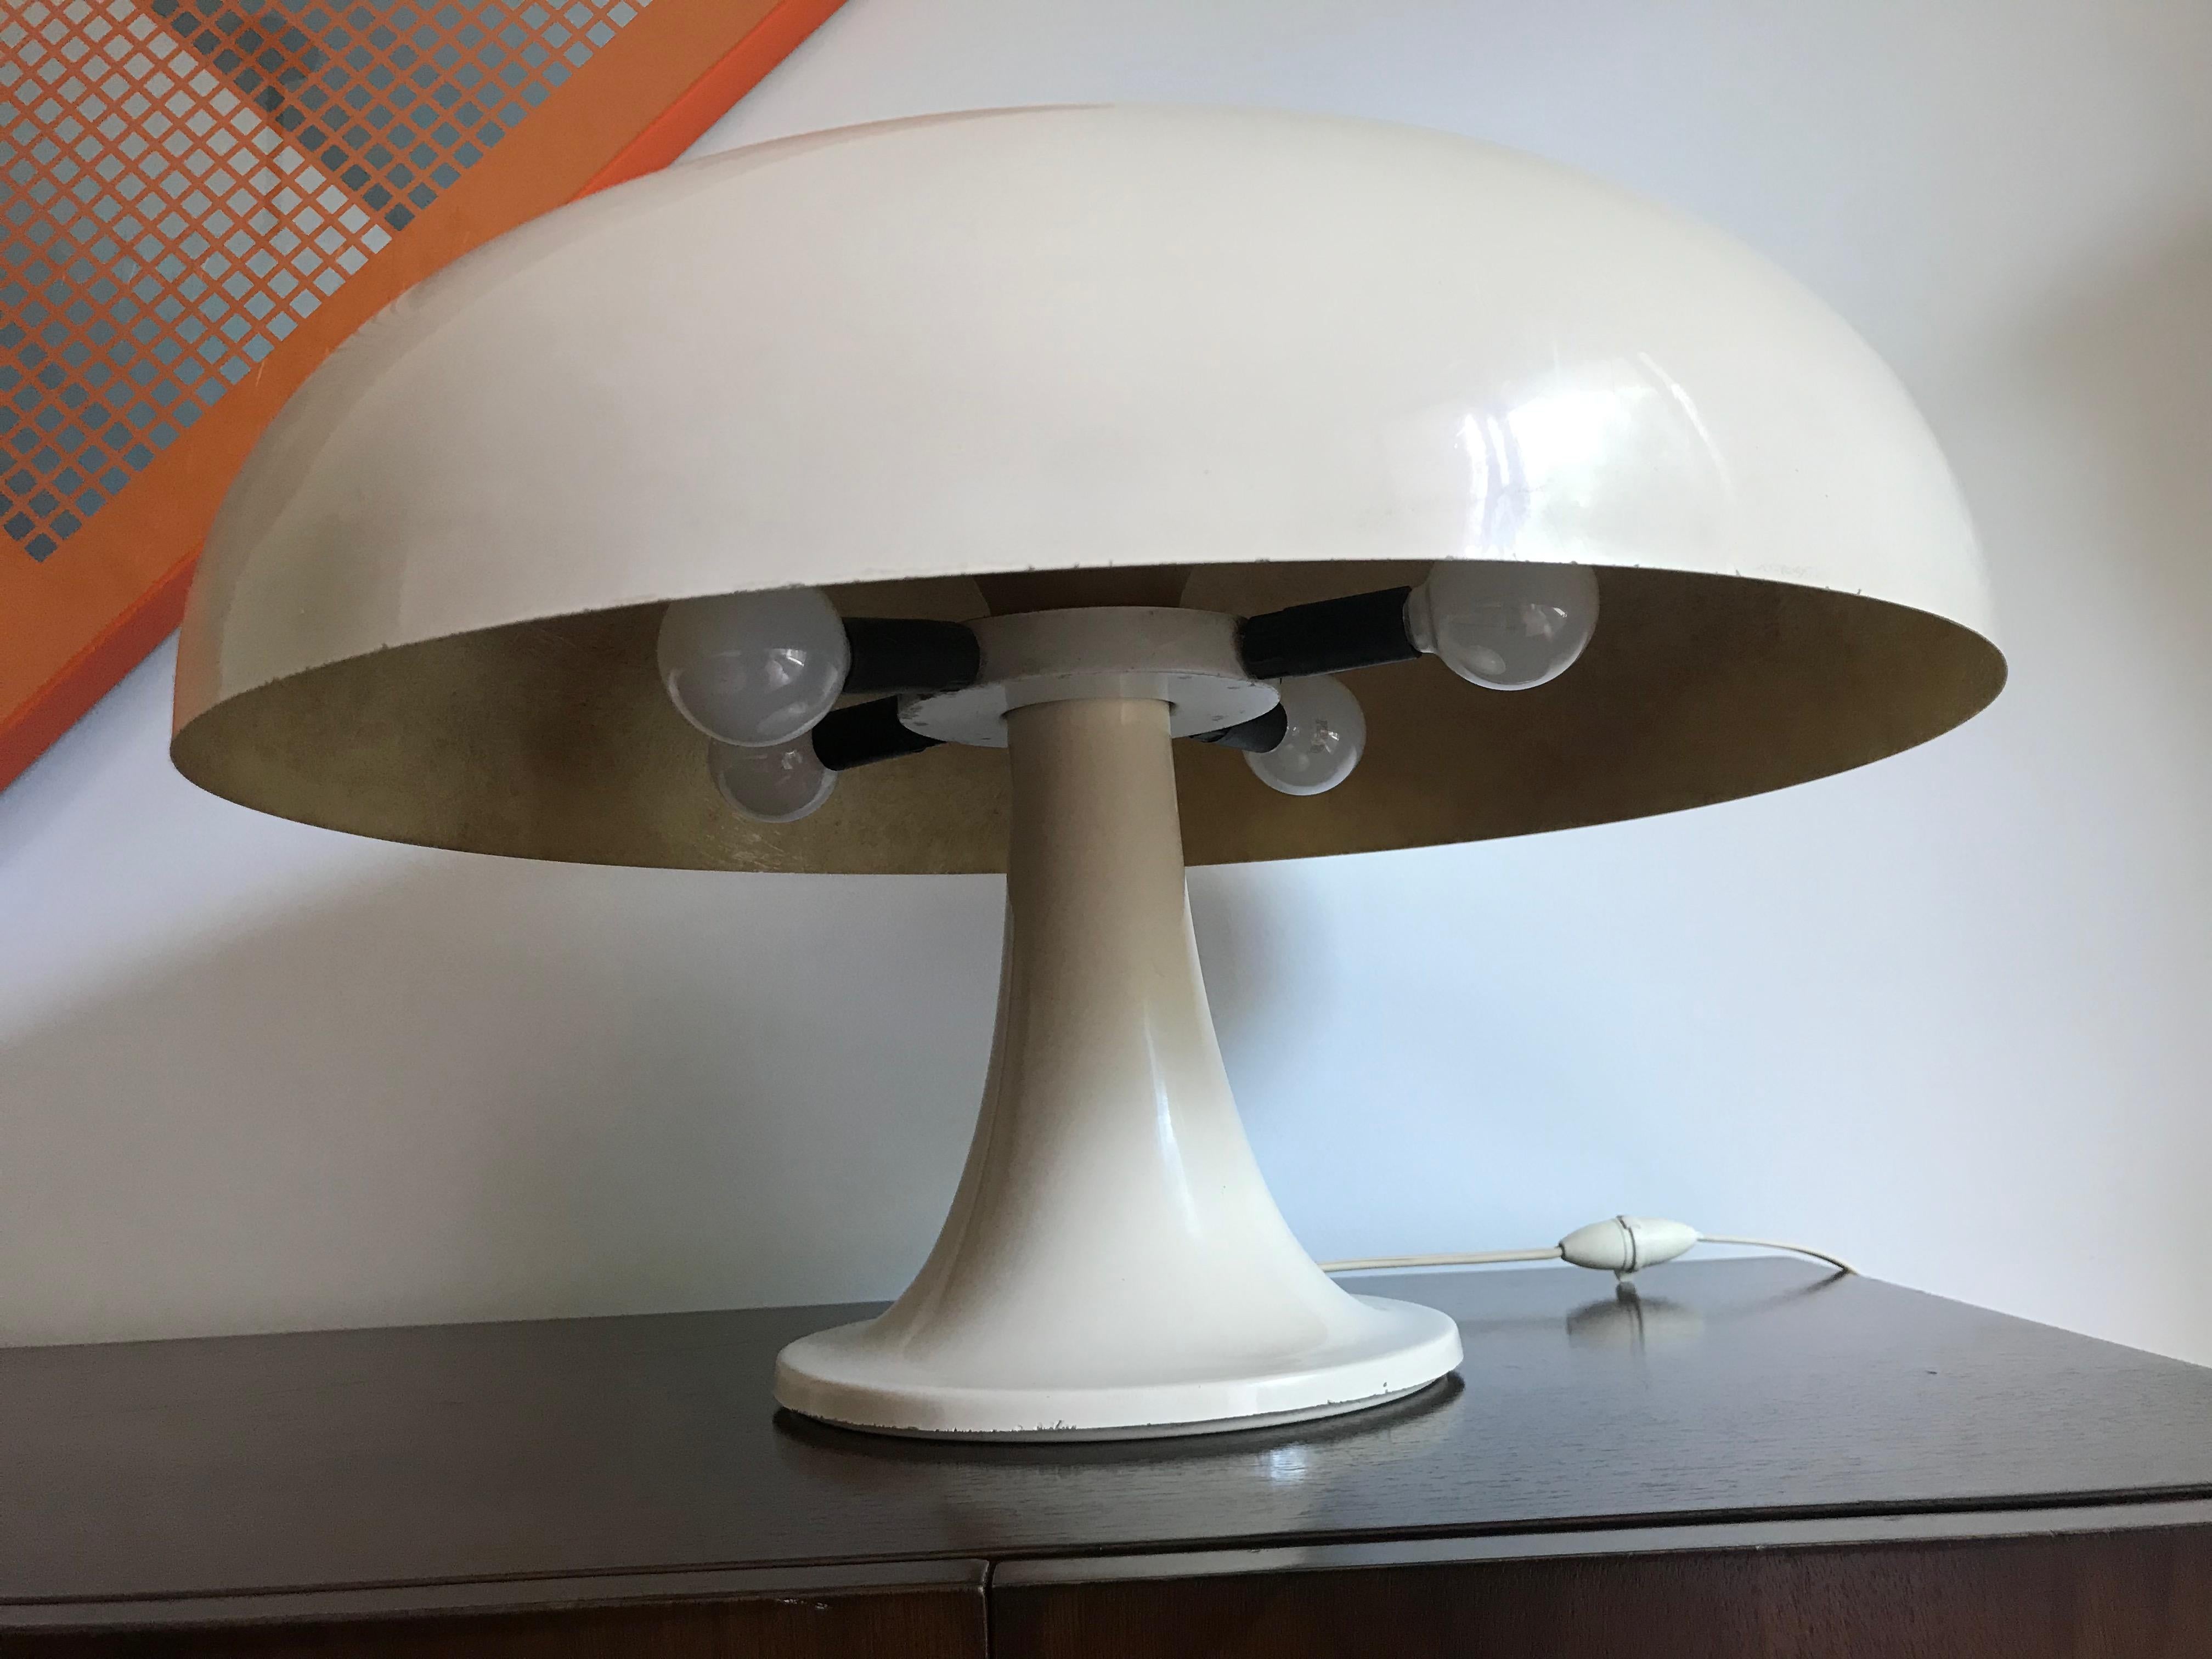 mushroom lamp standing